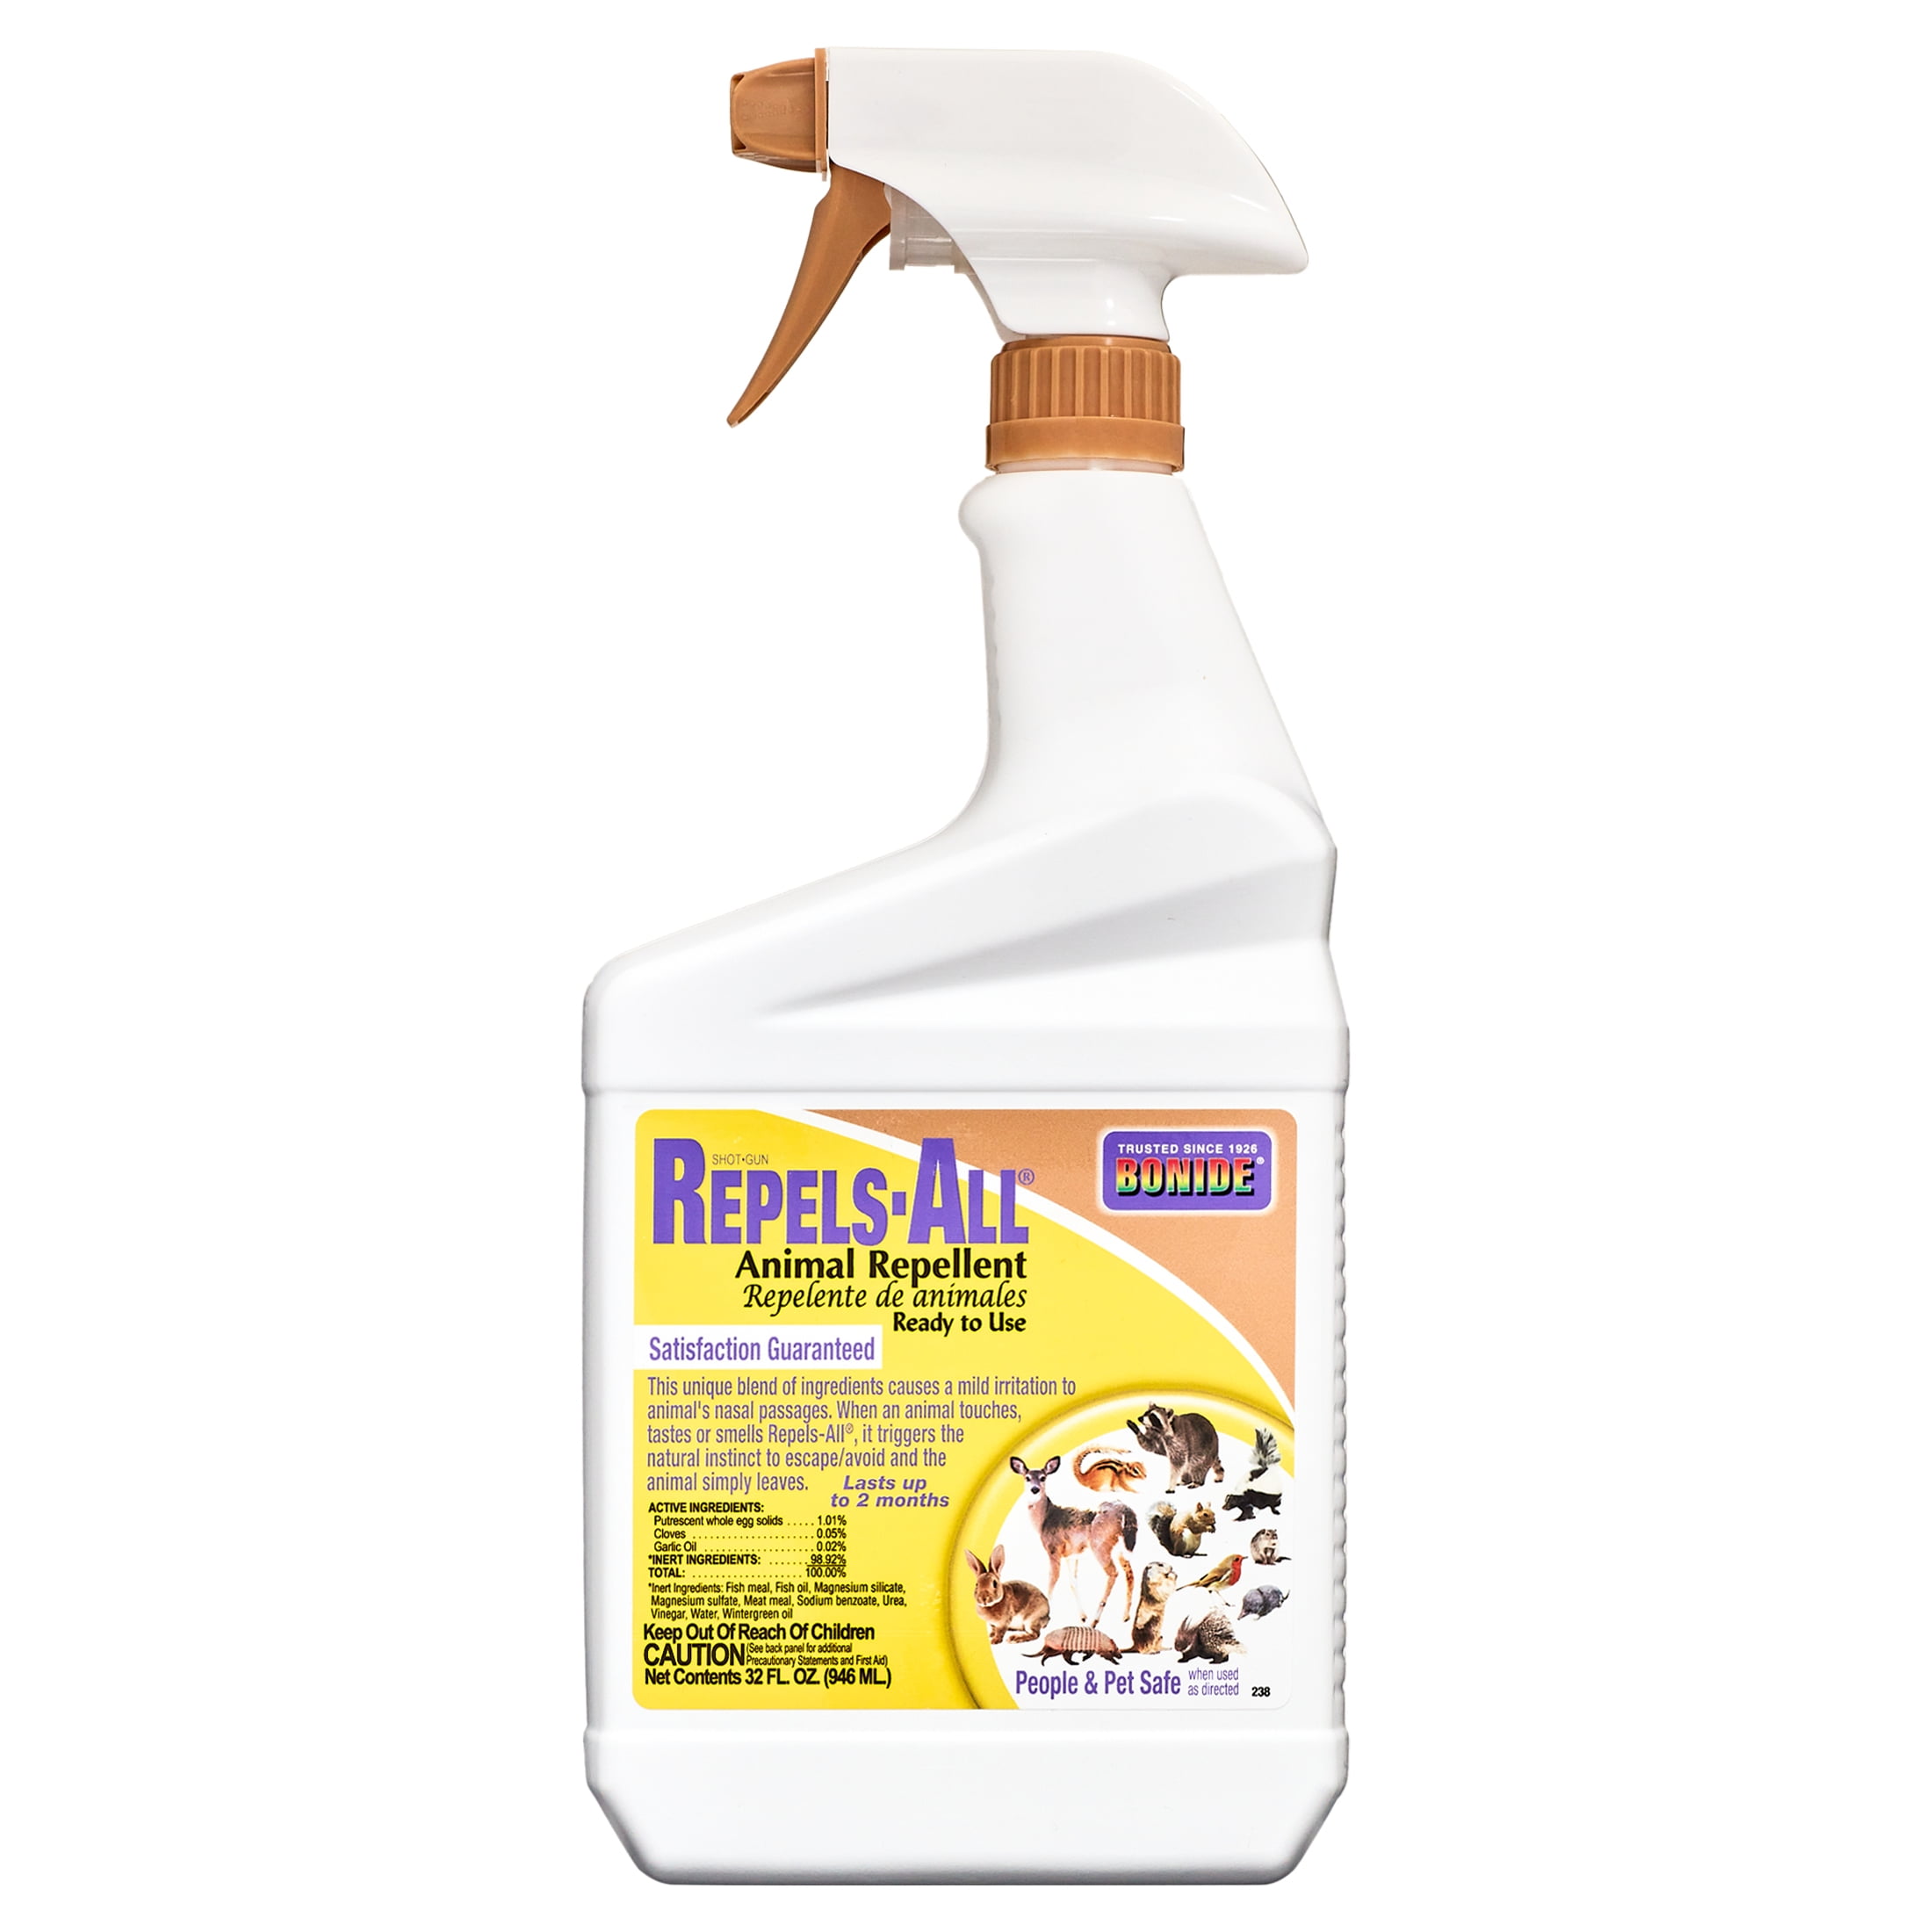 Bonide's Shot-Gun Repels-All Animal Repellent Spray - 32 fl oz bottle